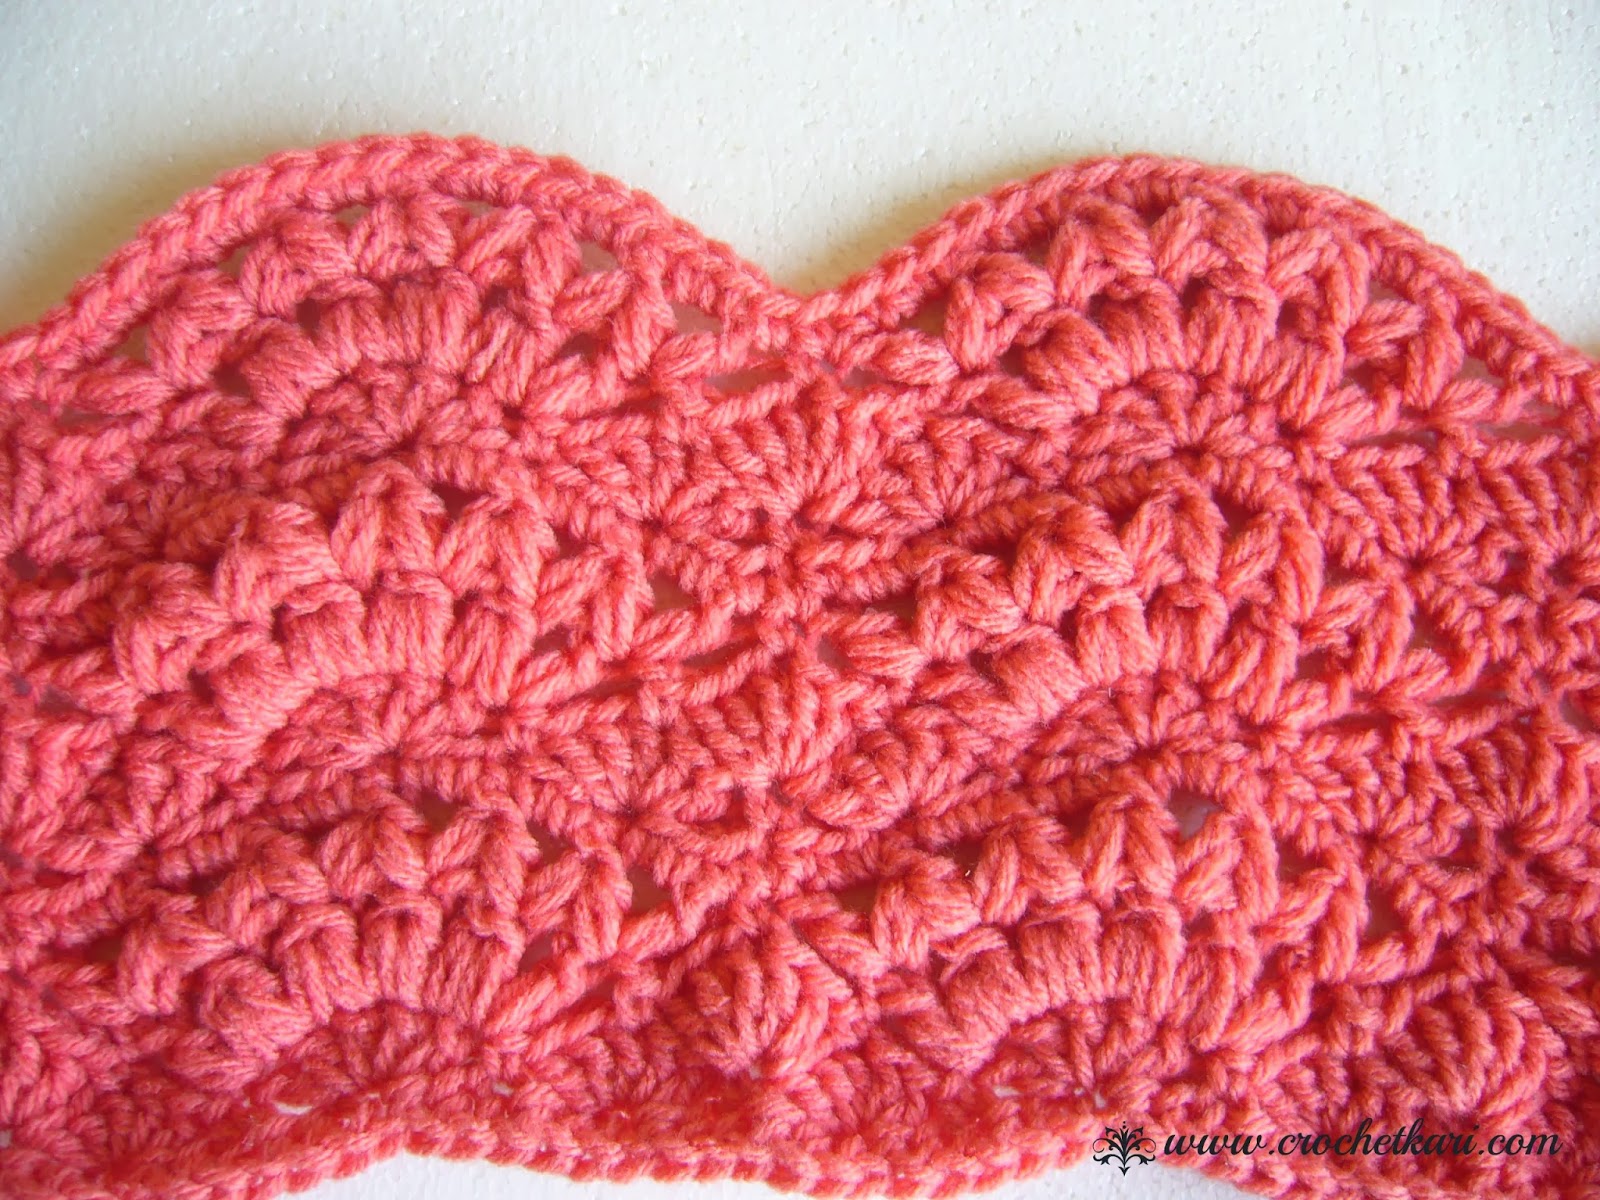 Salmon crochet cawl detail